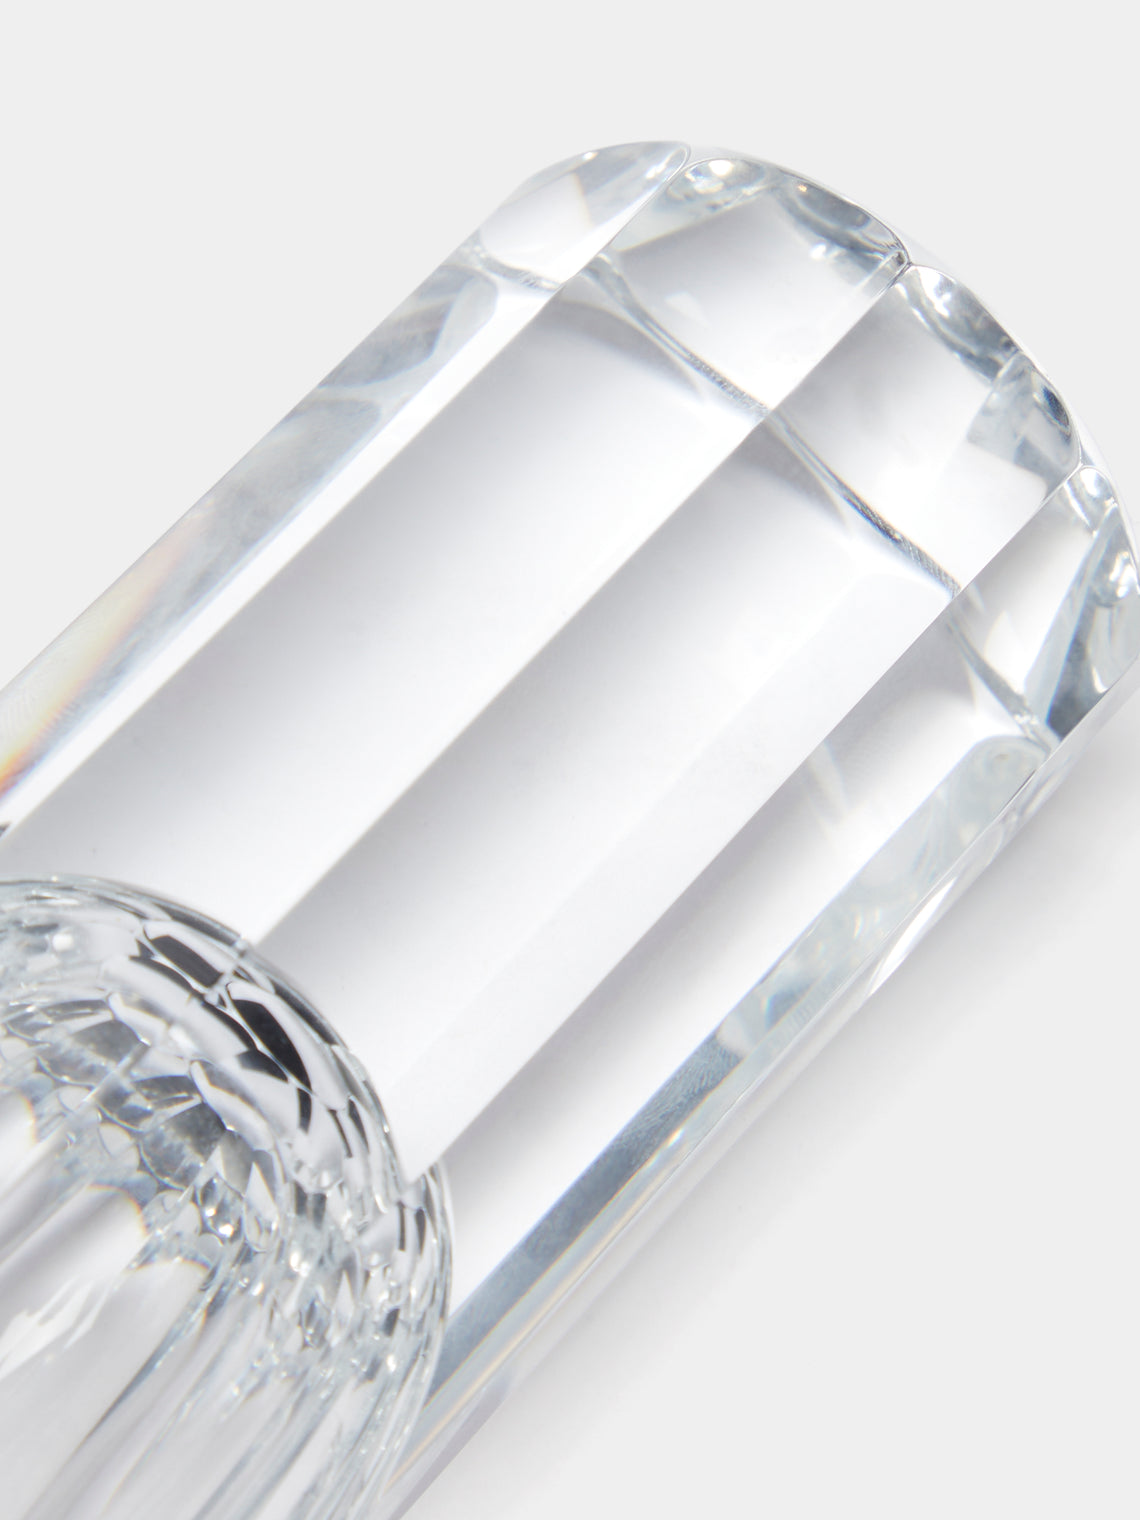 Lobmeyr - Wersin Hand-Blown Crystal Liqueur Tumblers (Set of 2) - Clear - ABASK